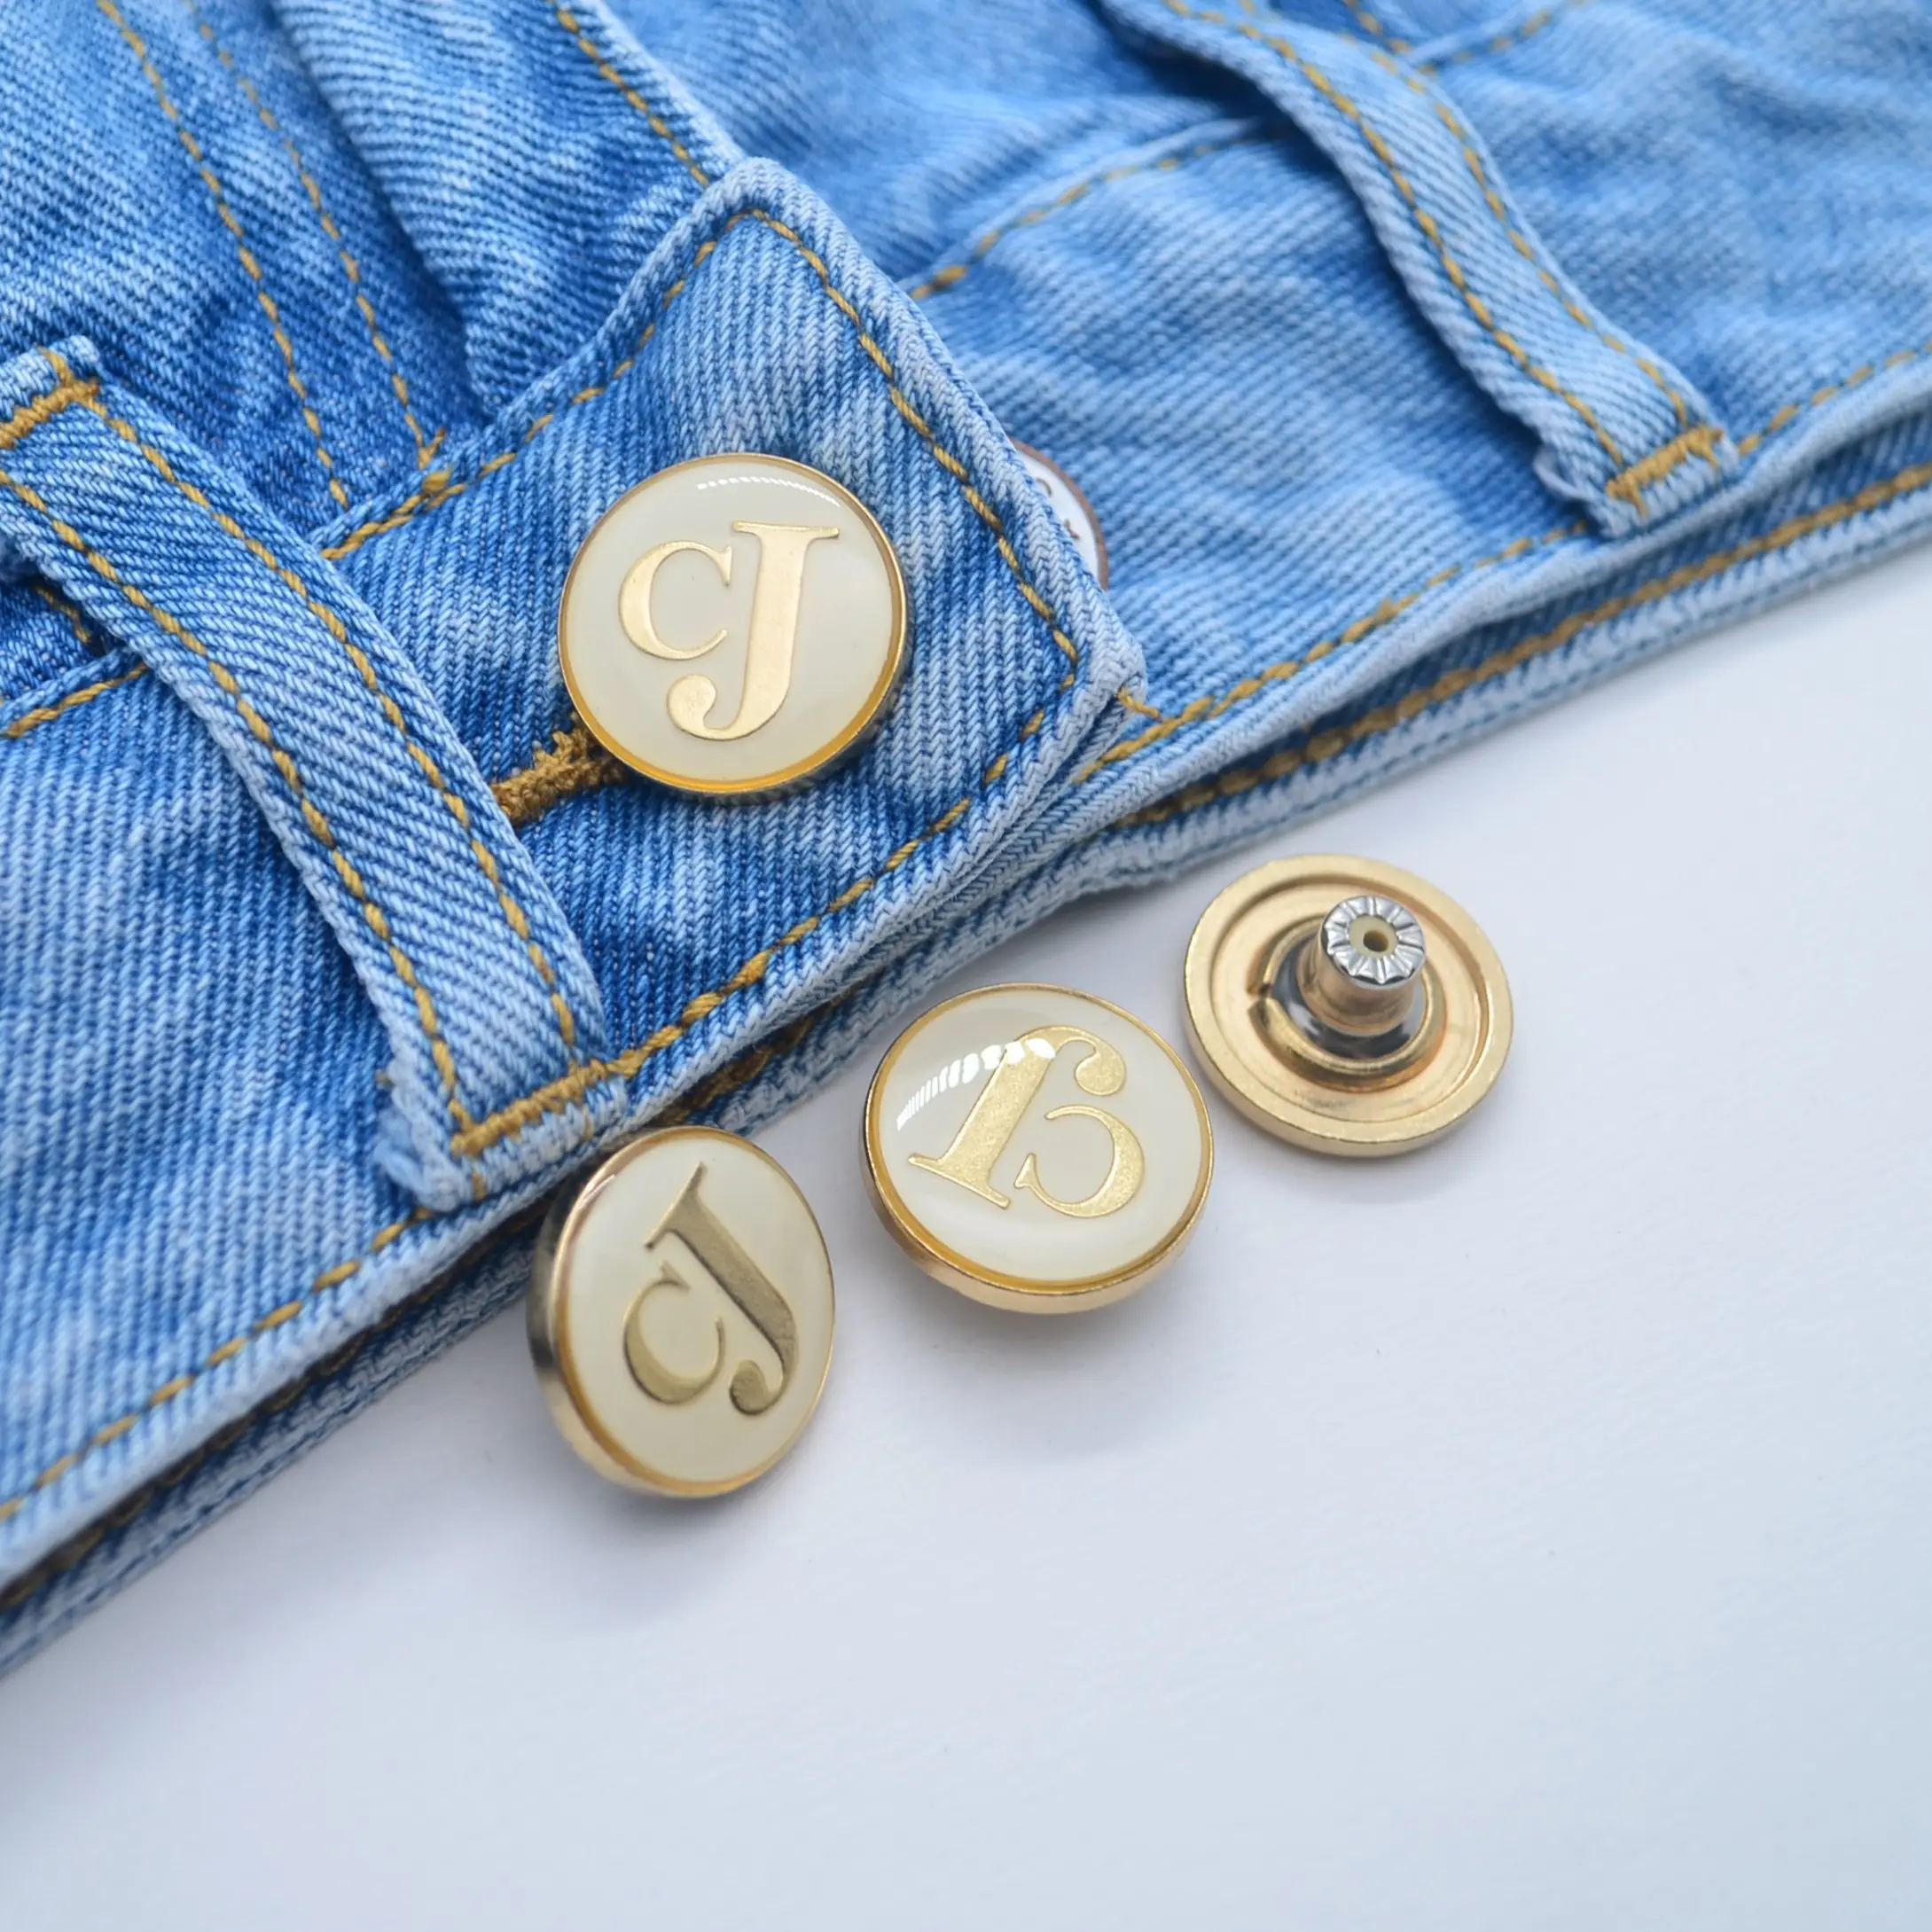 Factory direct wholesale custom design metal jean button accessories brass zinc alloy washable durable rivets buttons for jeans